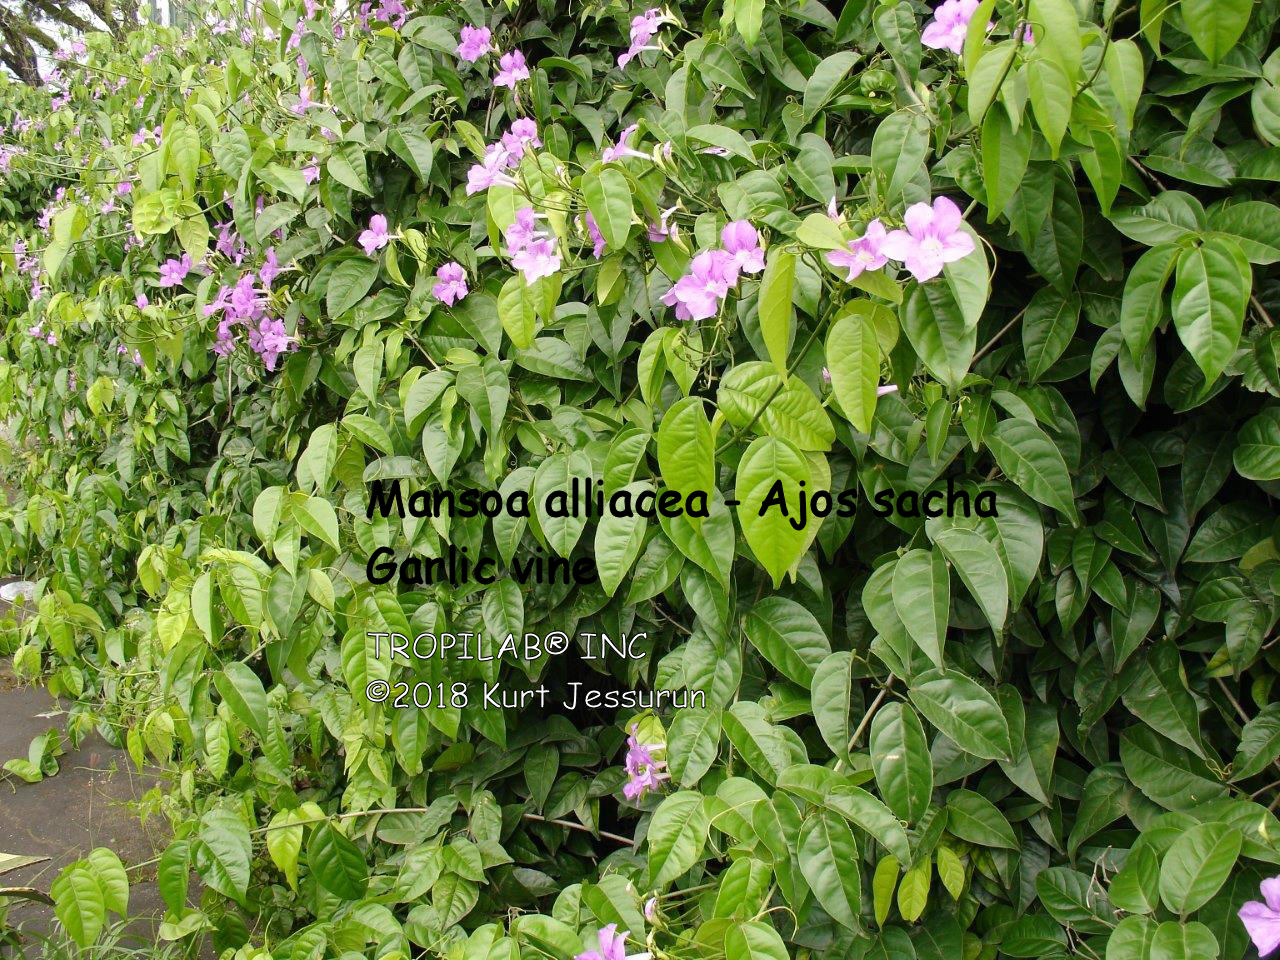 Mansoa alliacea - Ajos sacha or Garlic vine